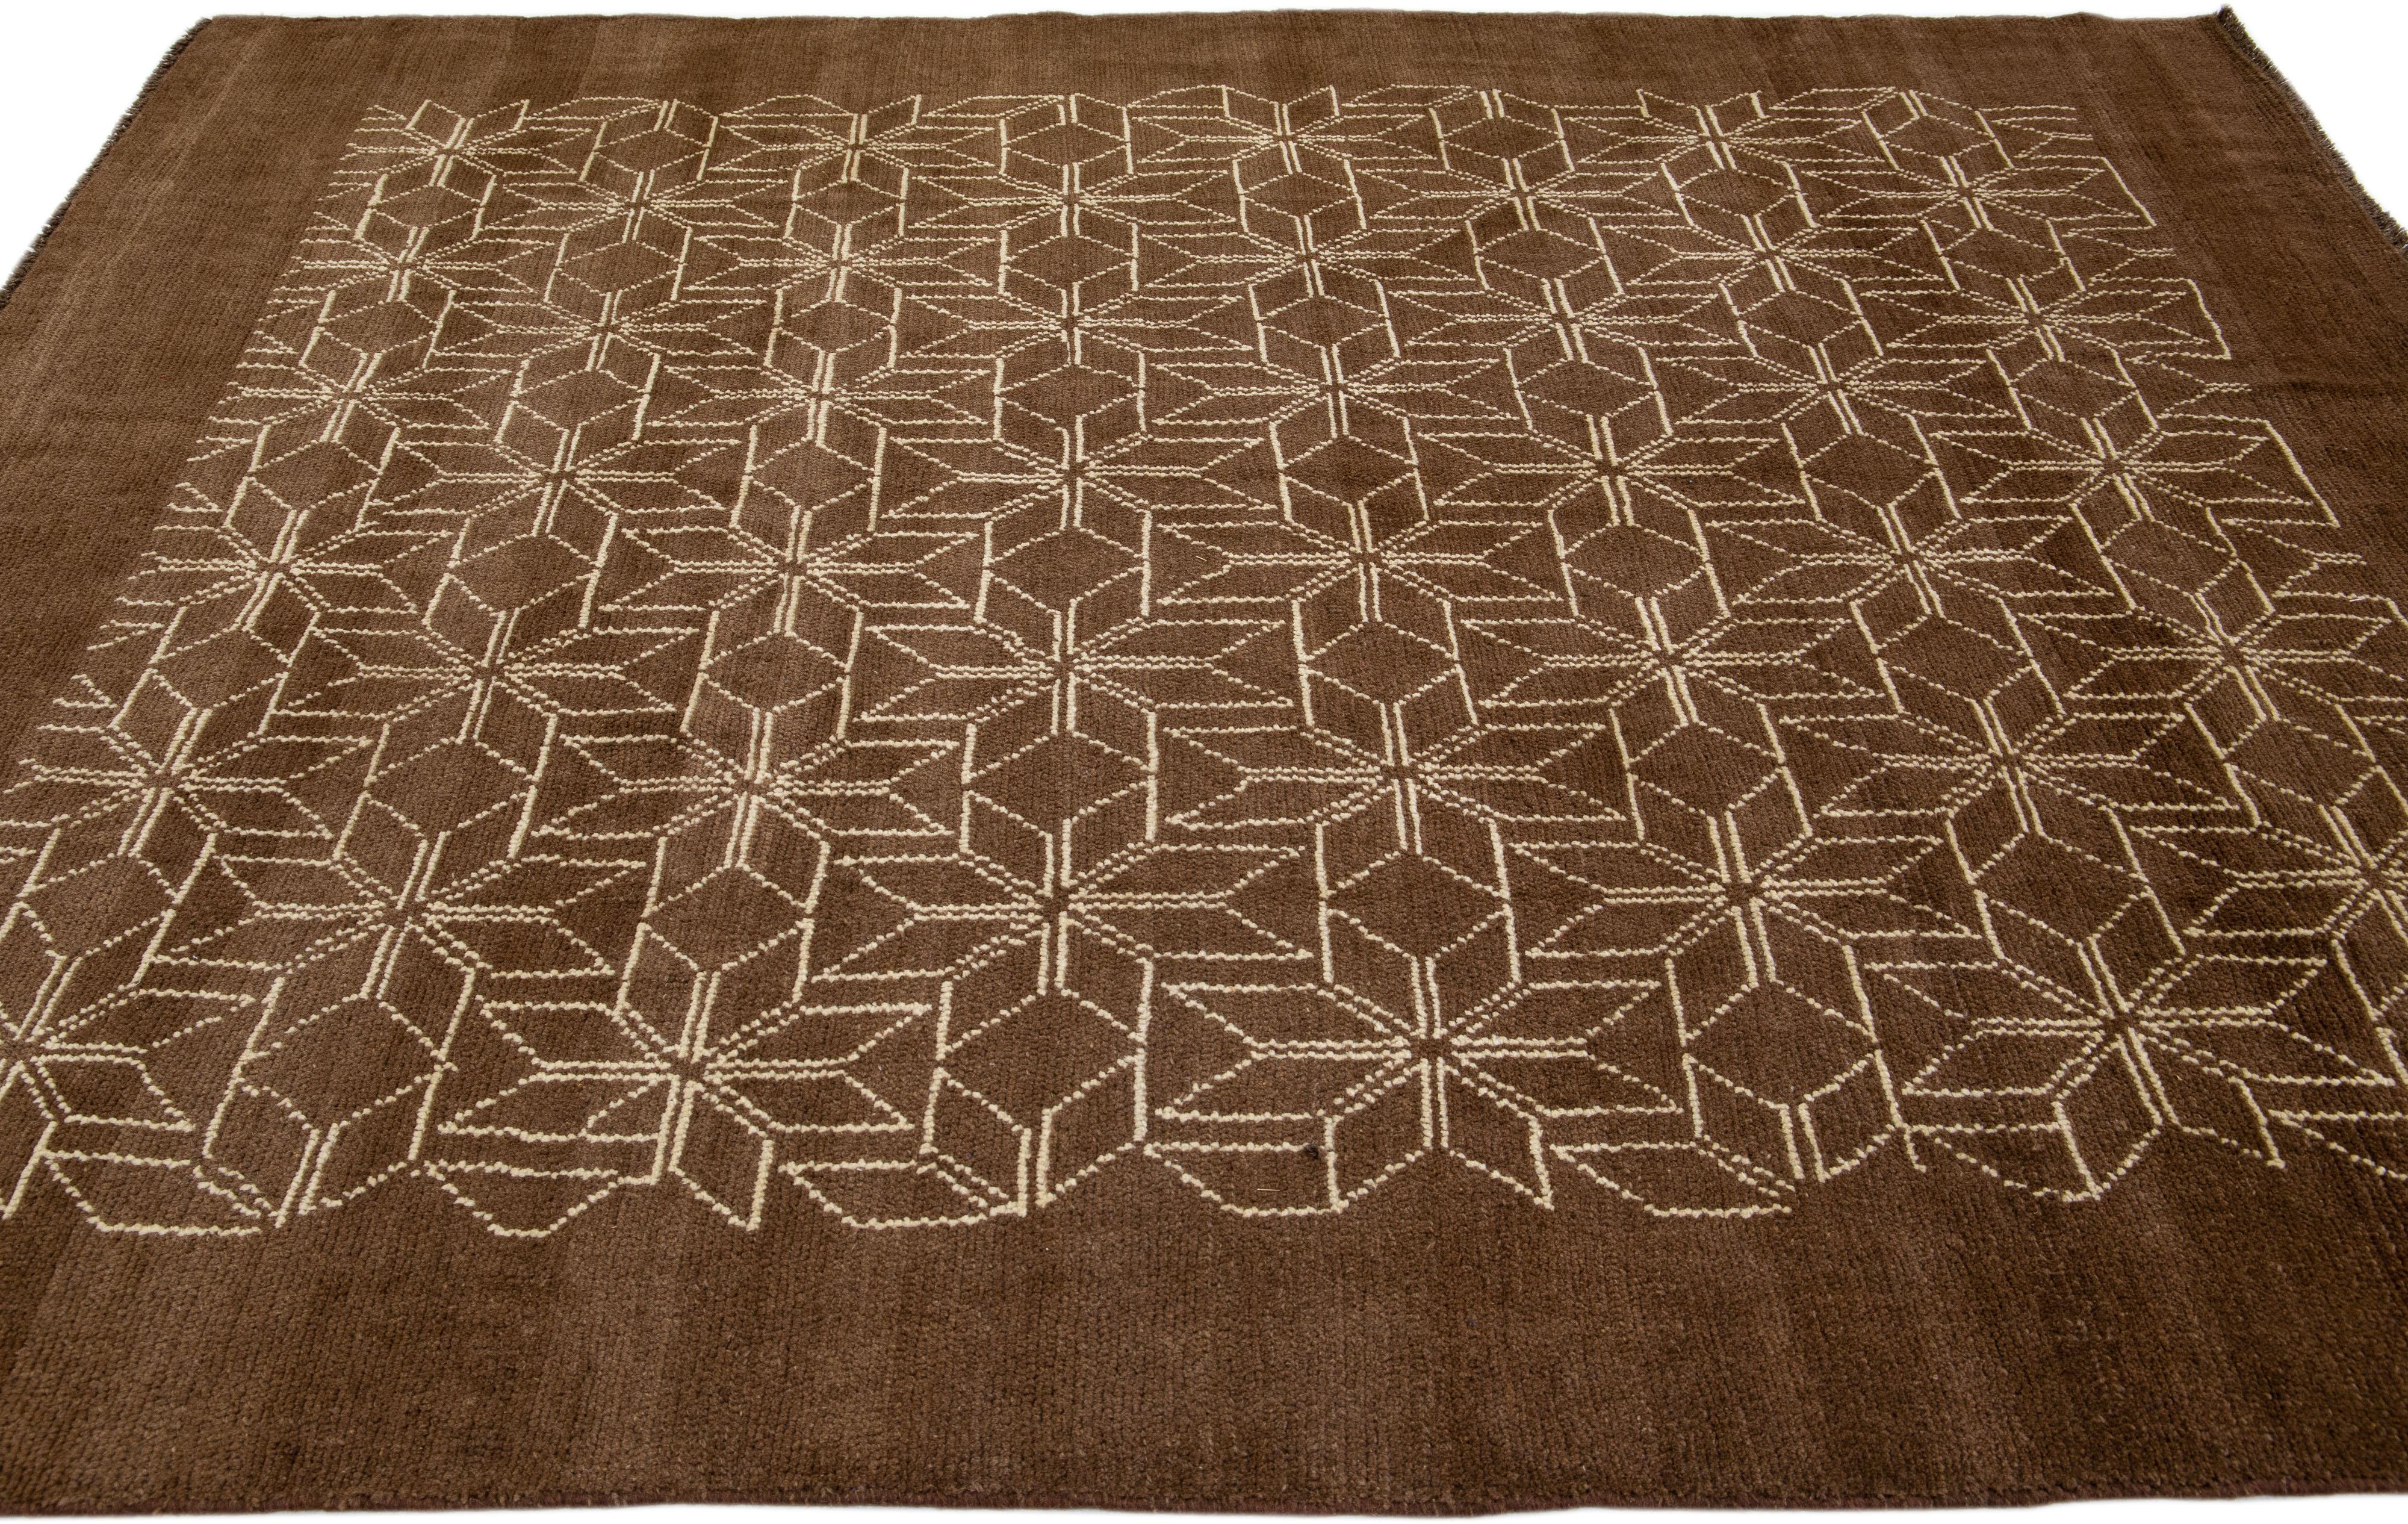 Contemporary Modern Moroccan Style Handmade Geometric Brown Wool Rug by Apadana For Sale